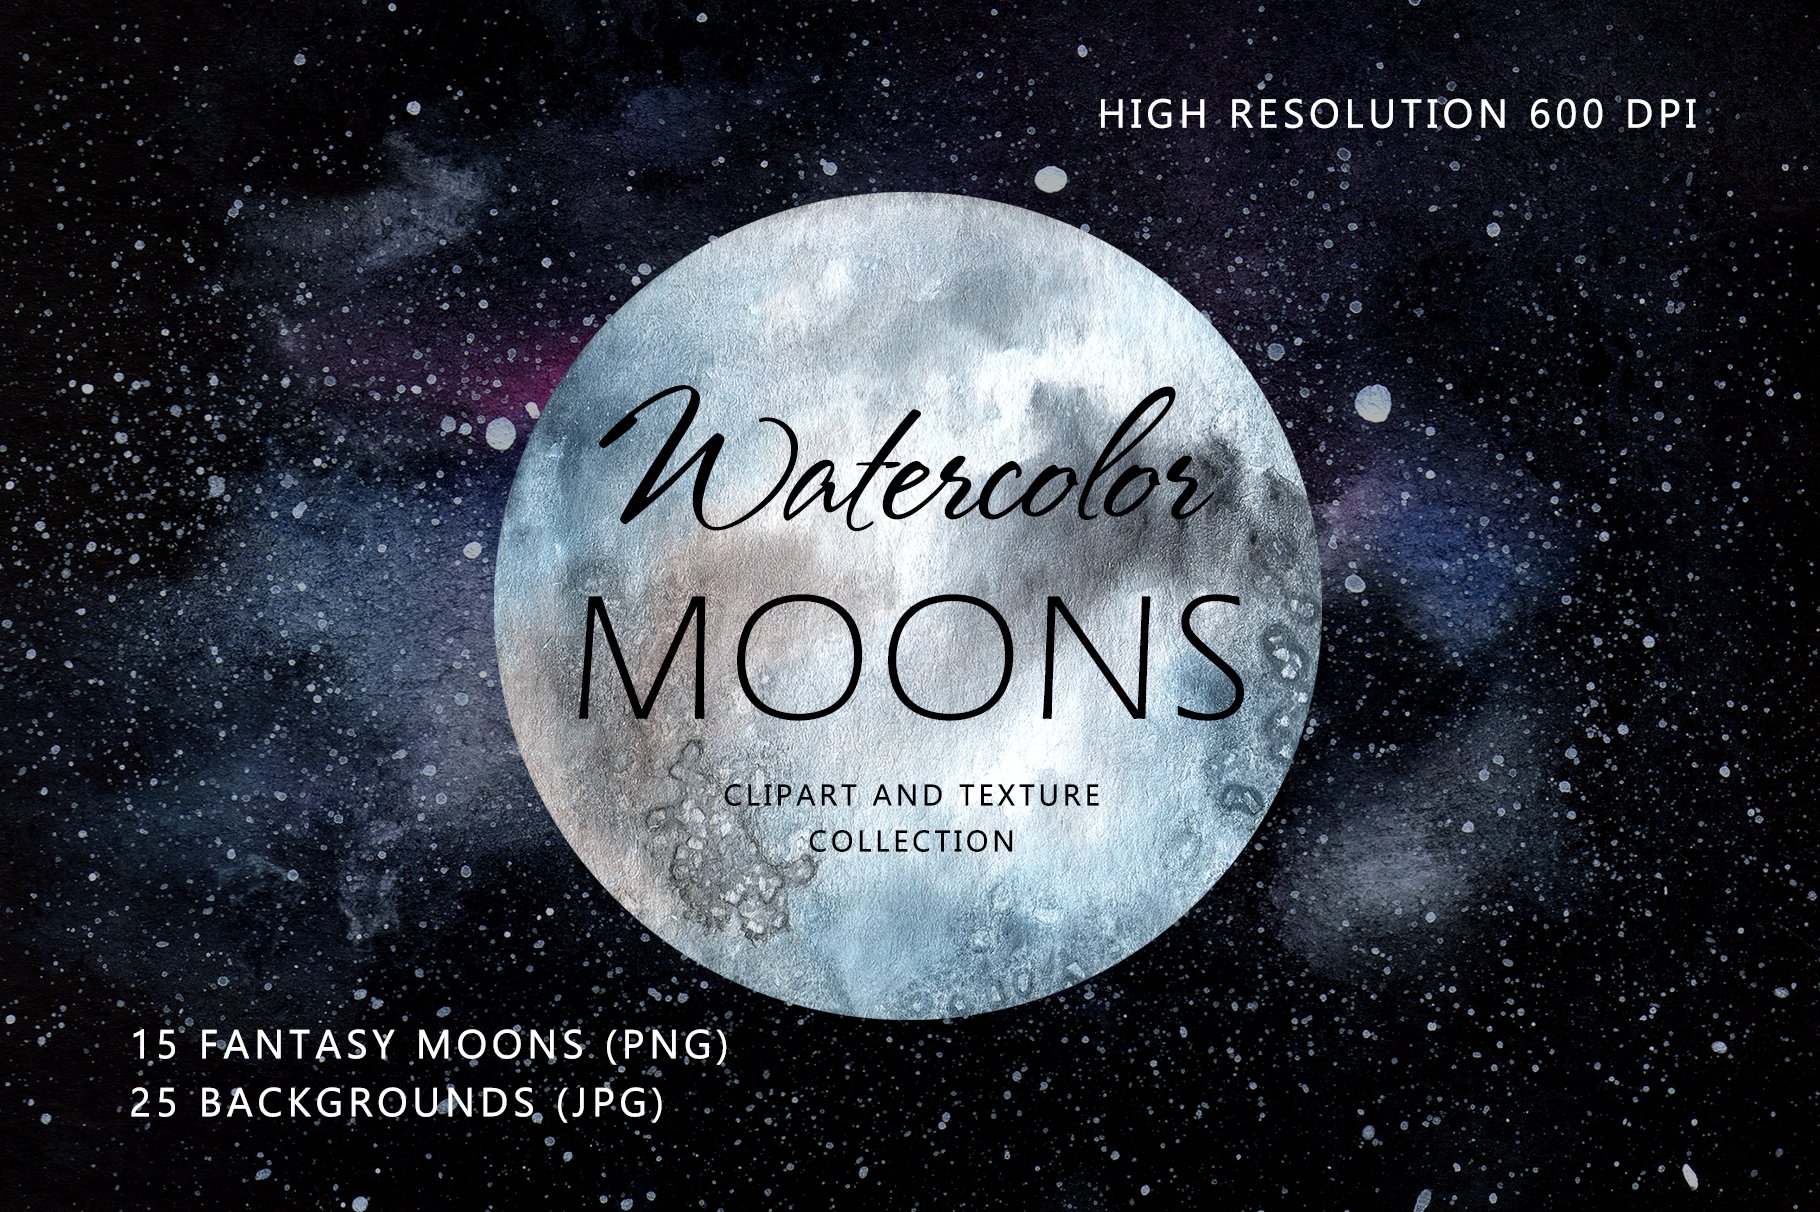 Watercolor fantasy moons cover image.